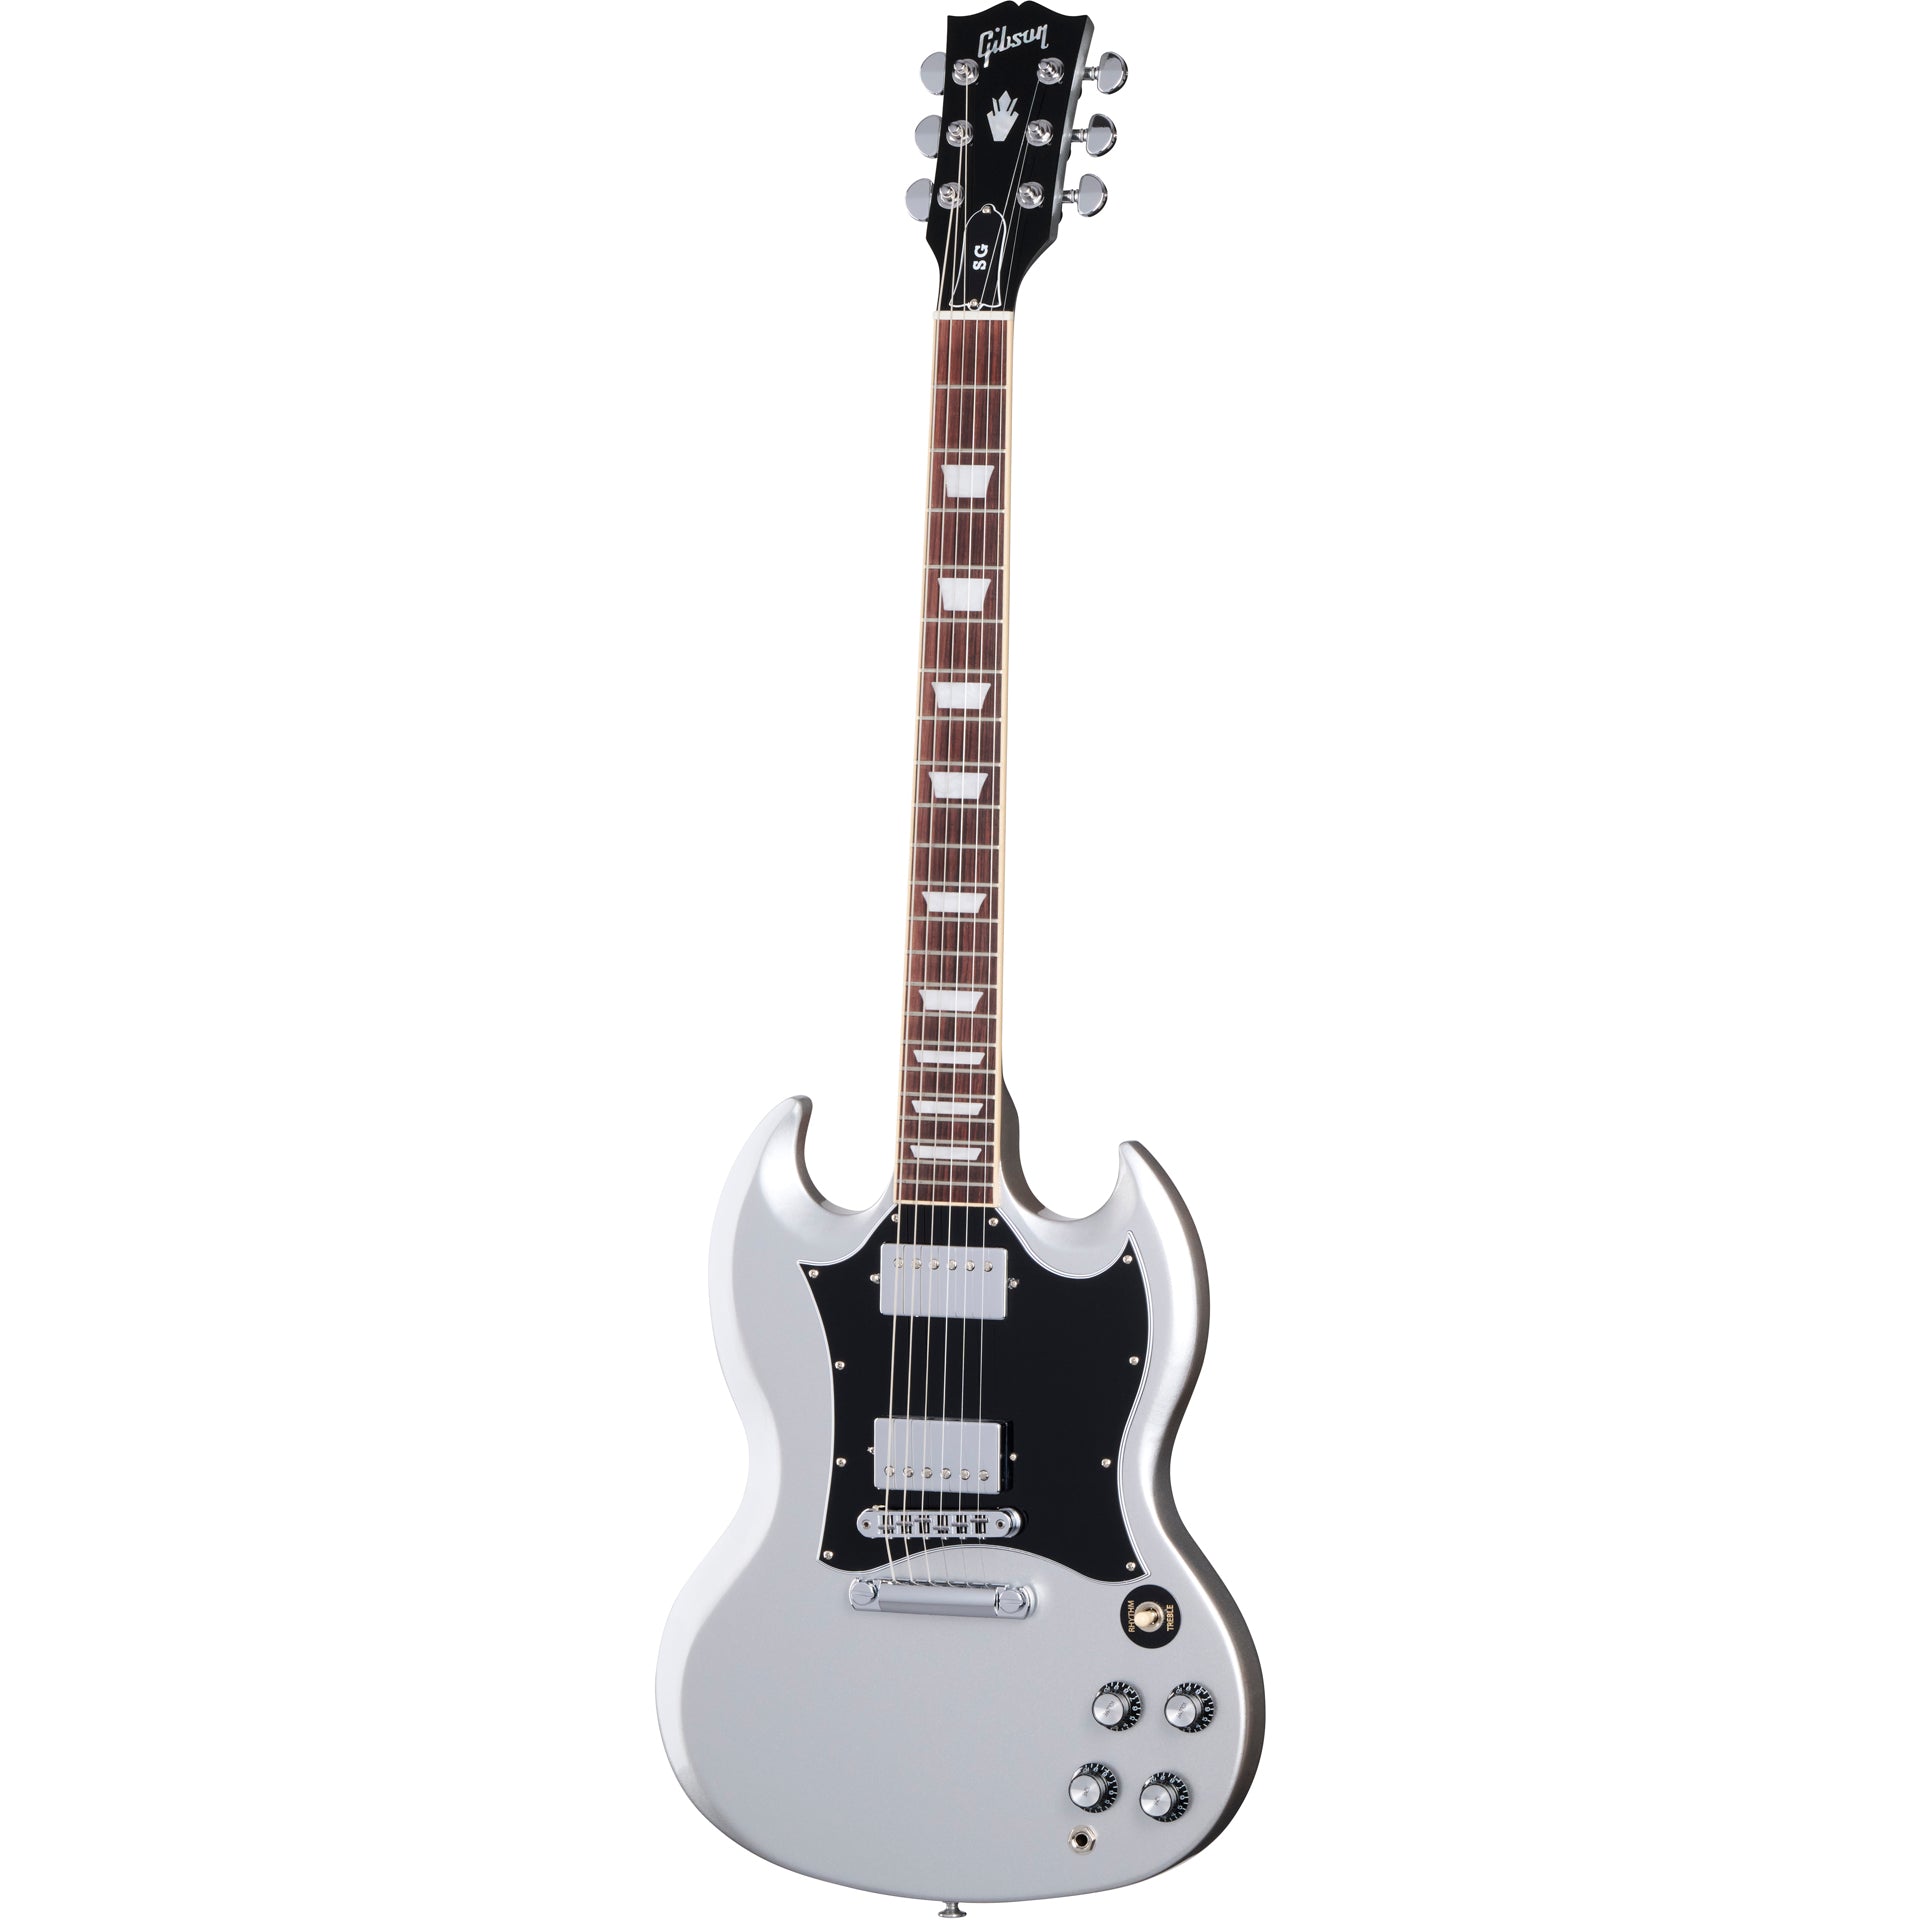 Gibson SG Standard Electric Guitar - Silver Metallic